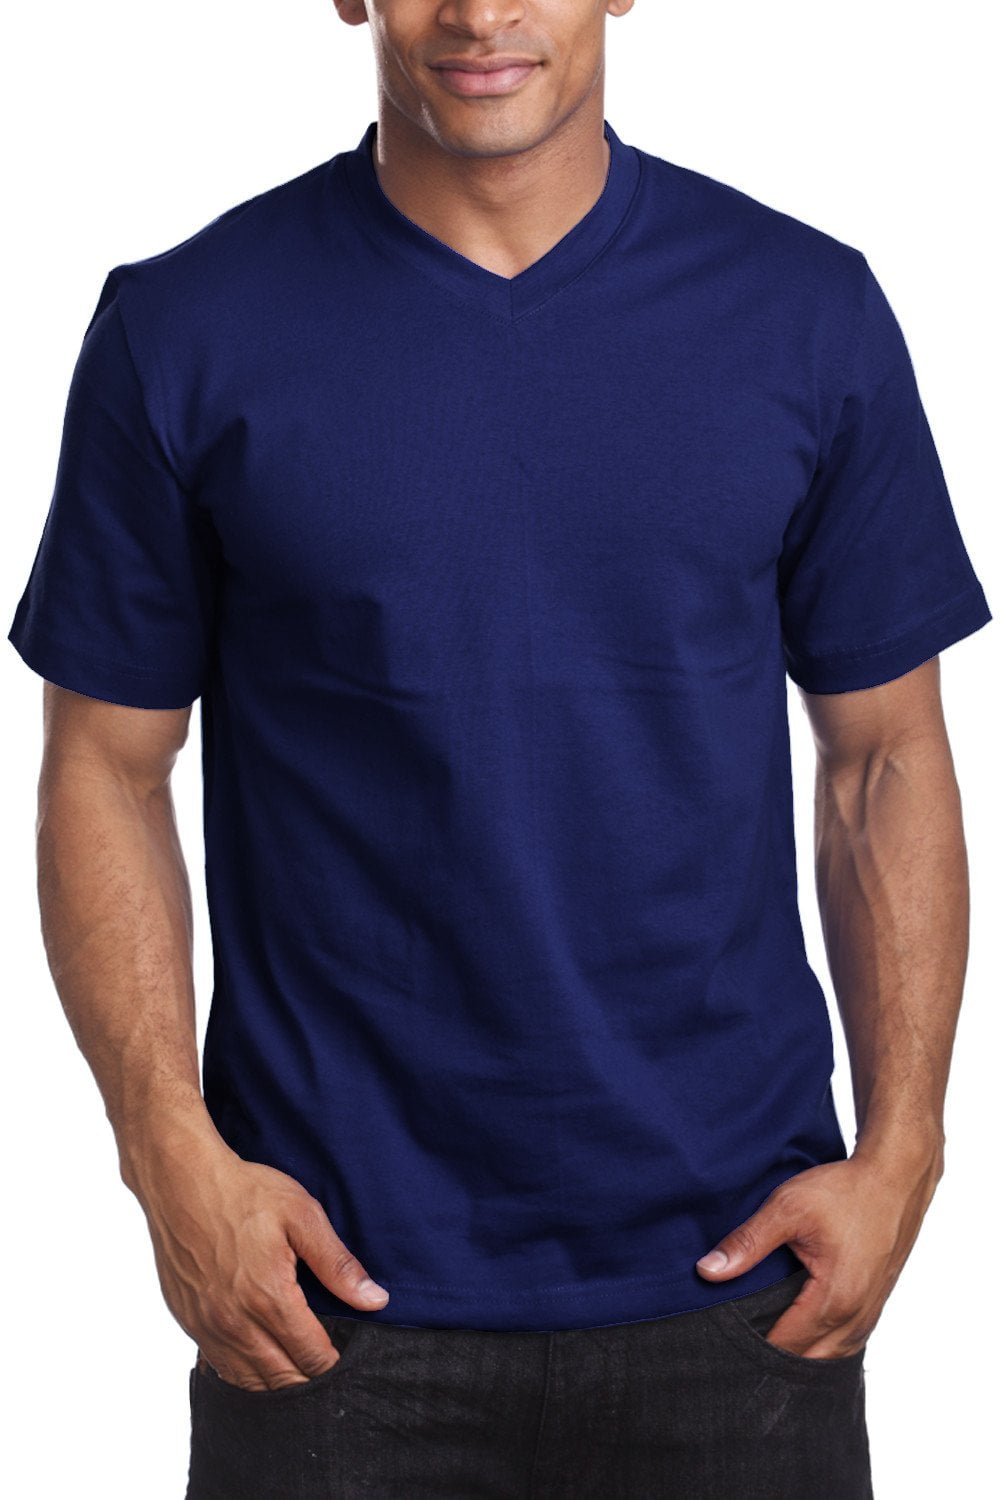 Pro 5 V-Neck Mens Short Sleeve T-Shirt,Navy,Large - Walmart.com